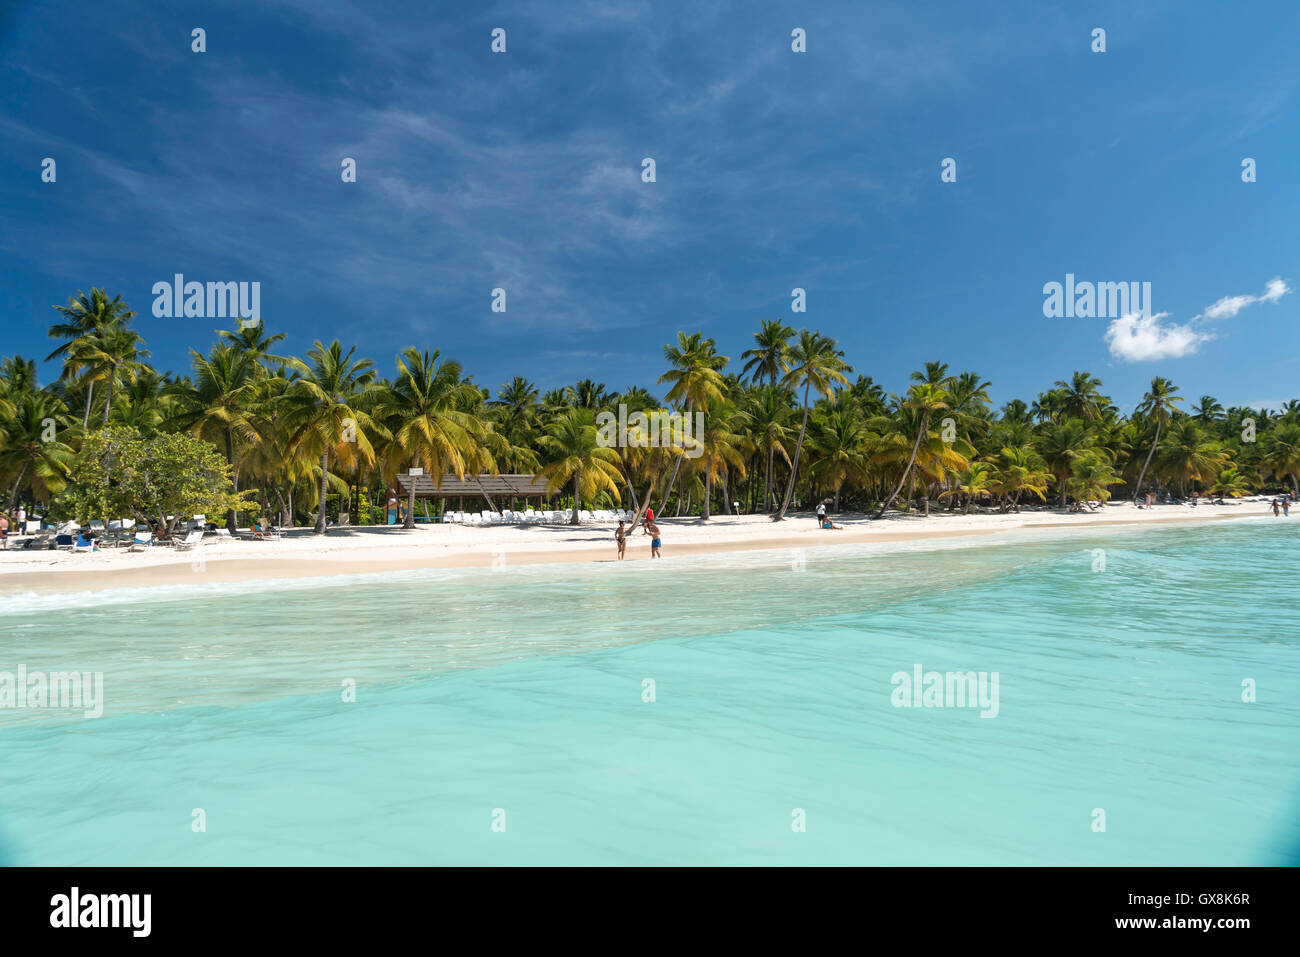 Traumstrand auf der karibischen Insel Isla Saona, Parque Nacional del Este, Dominikanische Republik, Karibik, Amerika, Stockfoto